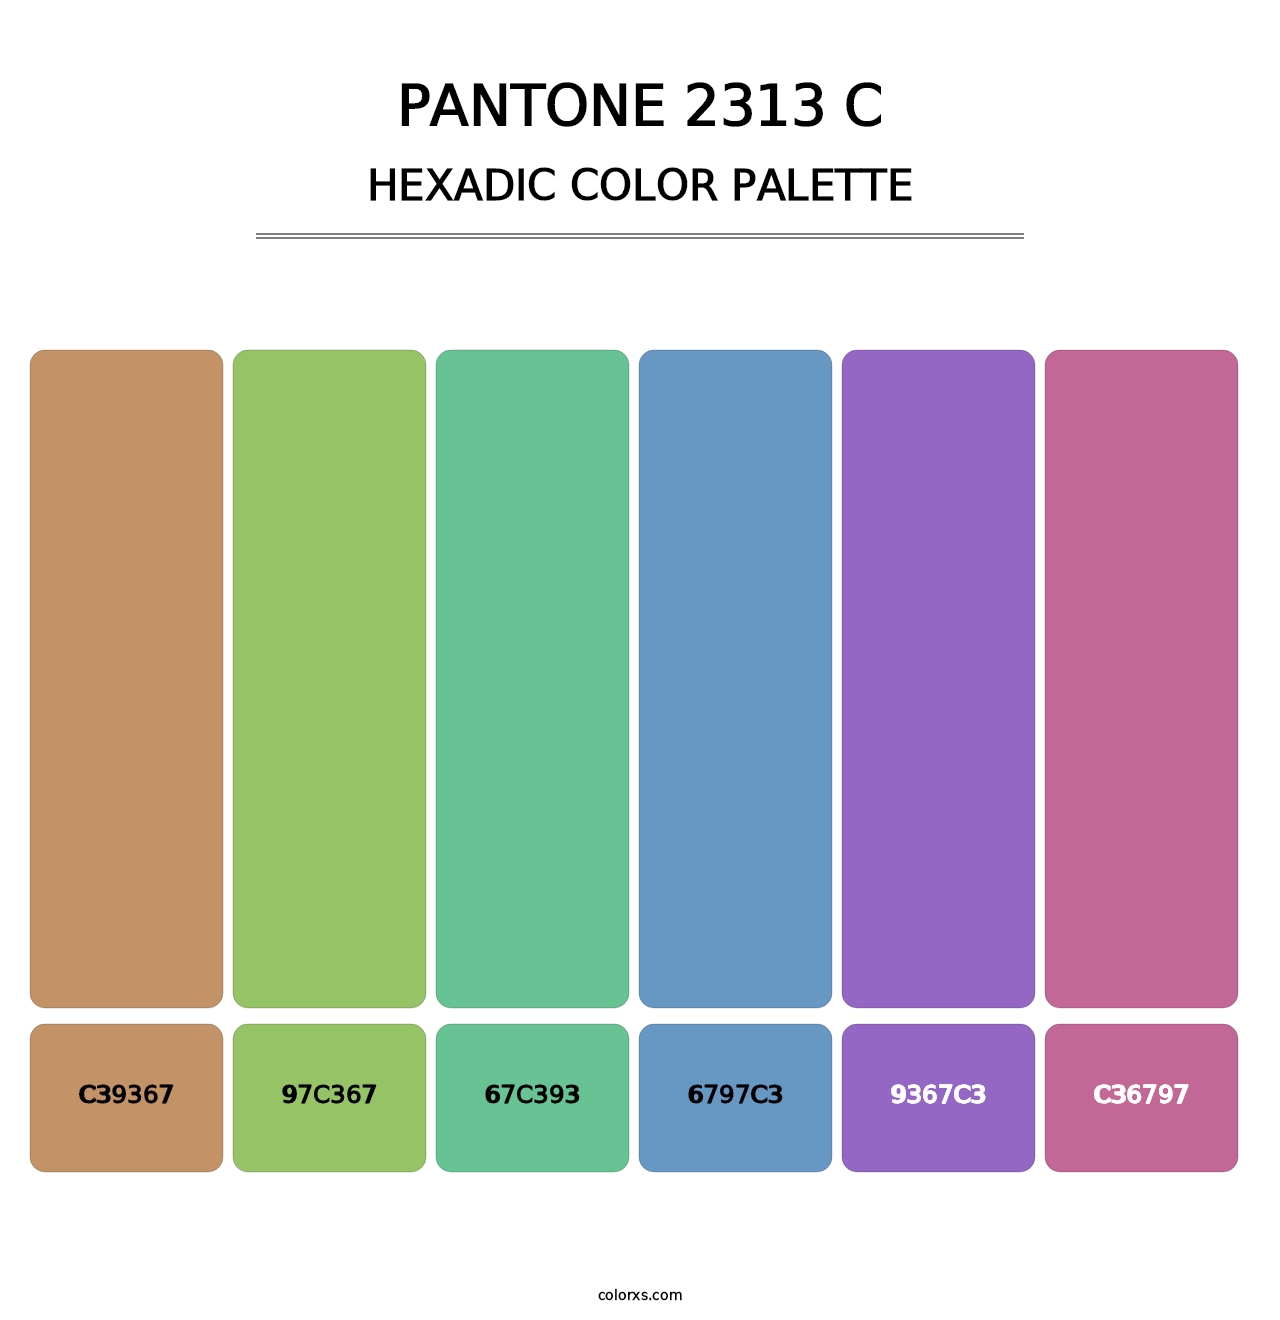 PANTONE 2313 C - Hexadic Color Palette